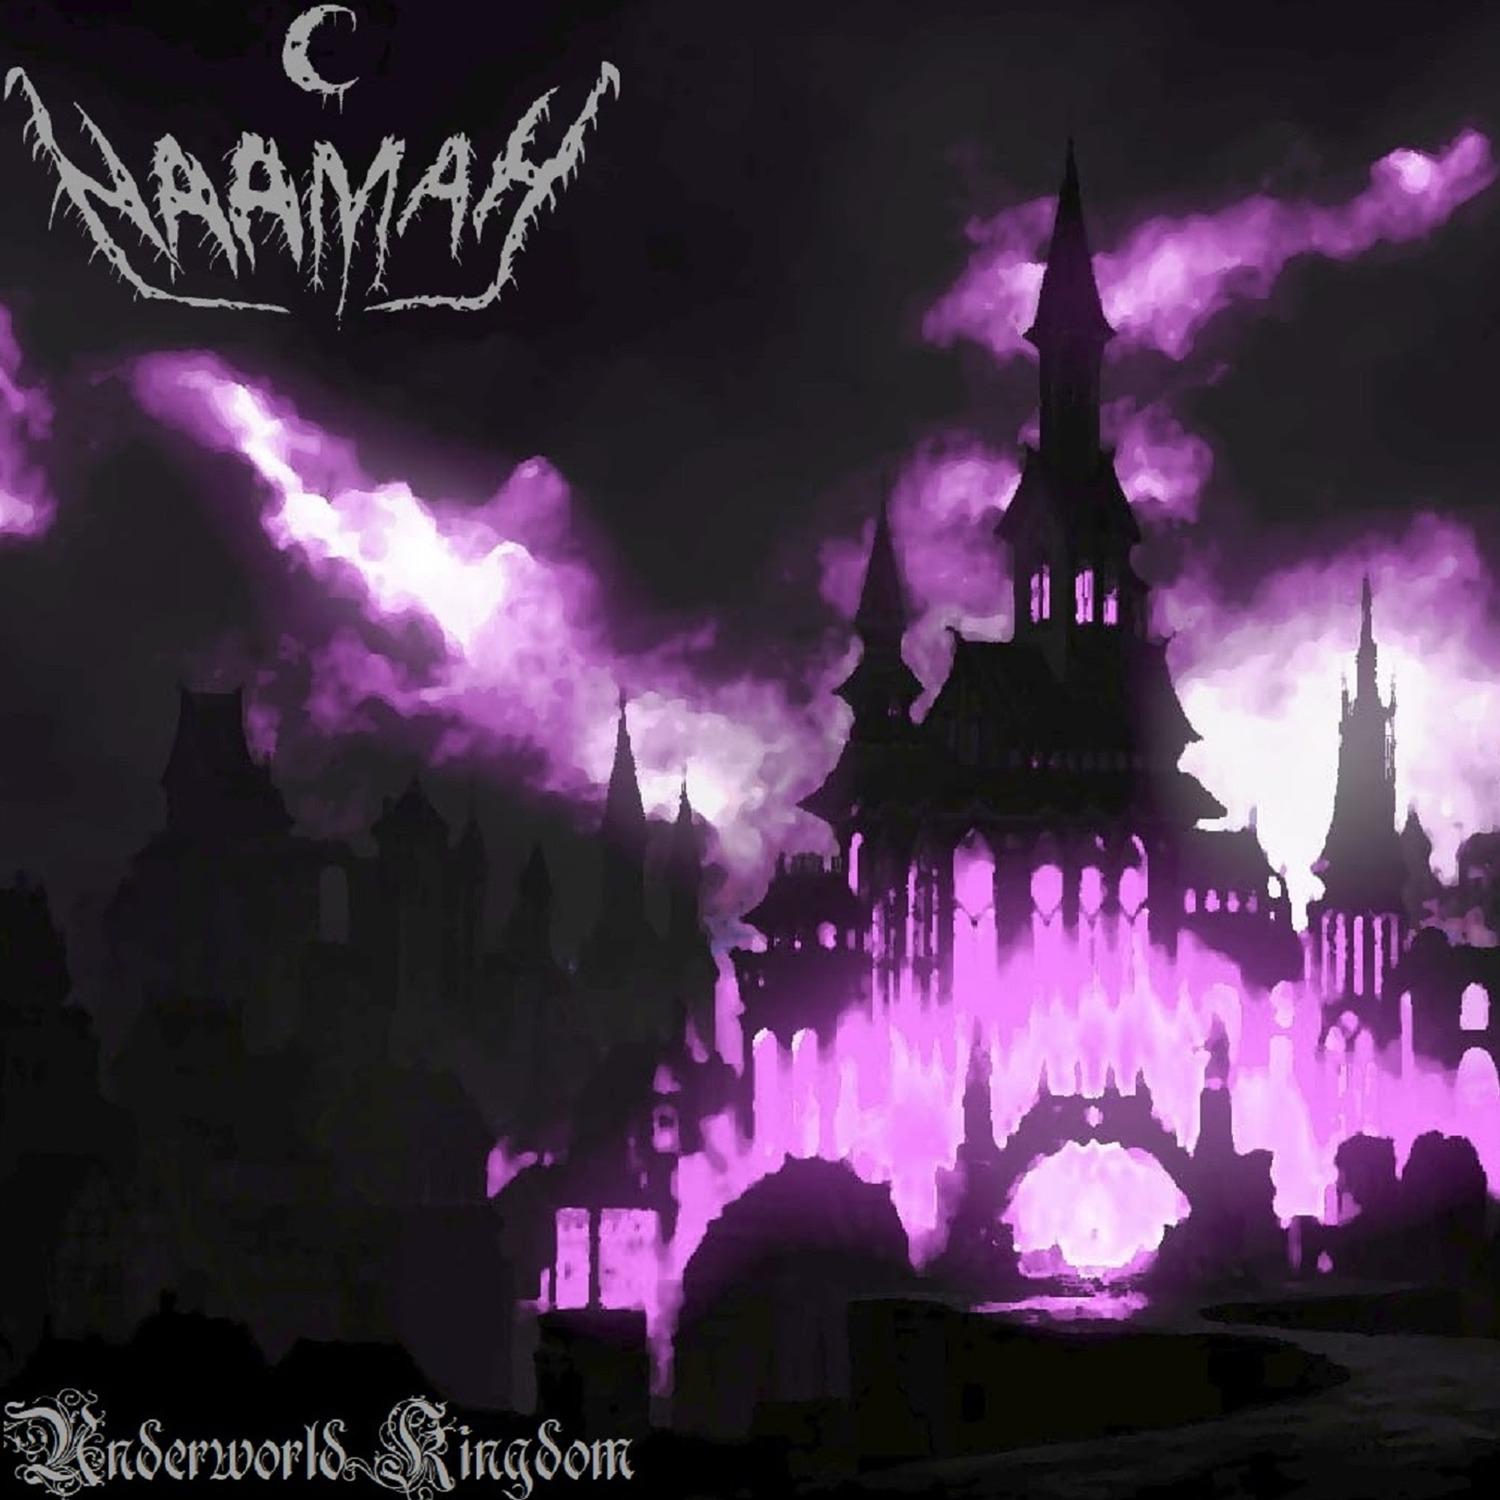 Underworld Kingdom